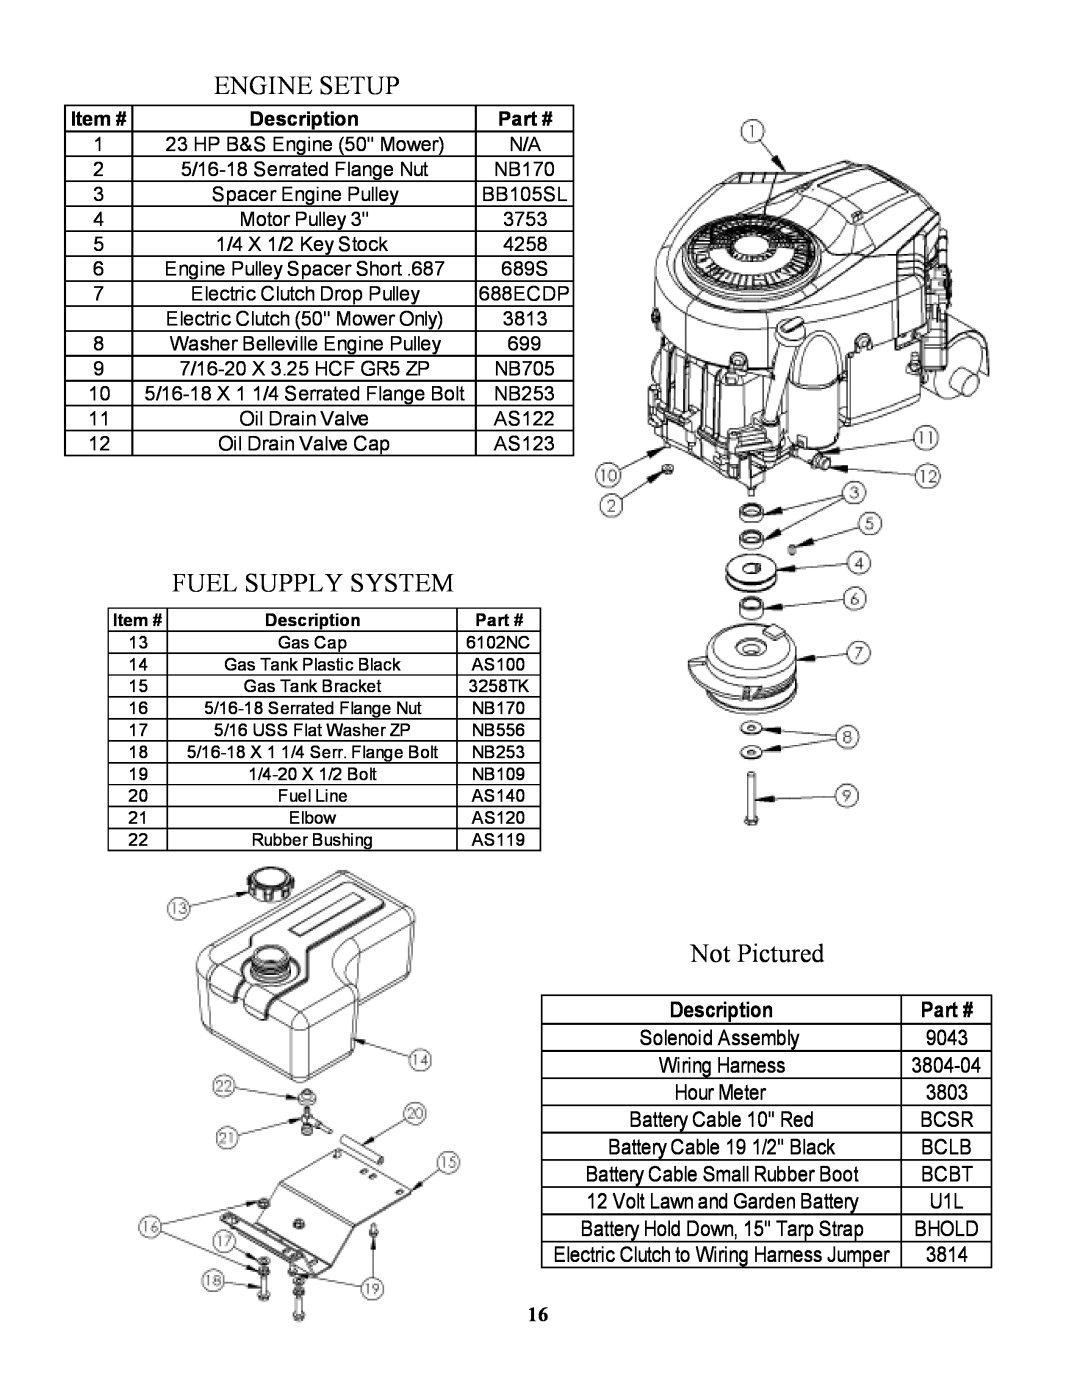 Swisher ZT2350 owner manual Engine Setup, Fuel Supply System, Not Pictured, Description, 9043, 3804-04, 3803, 3814 